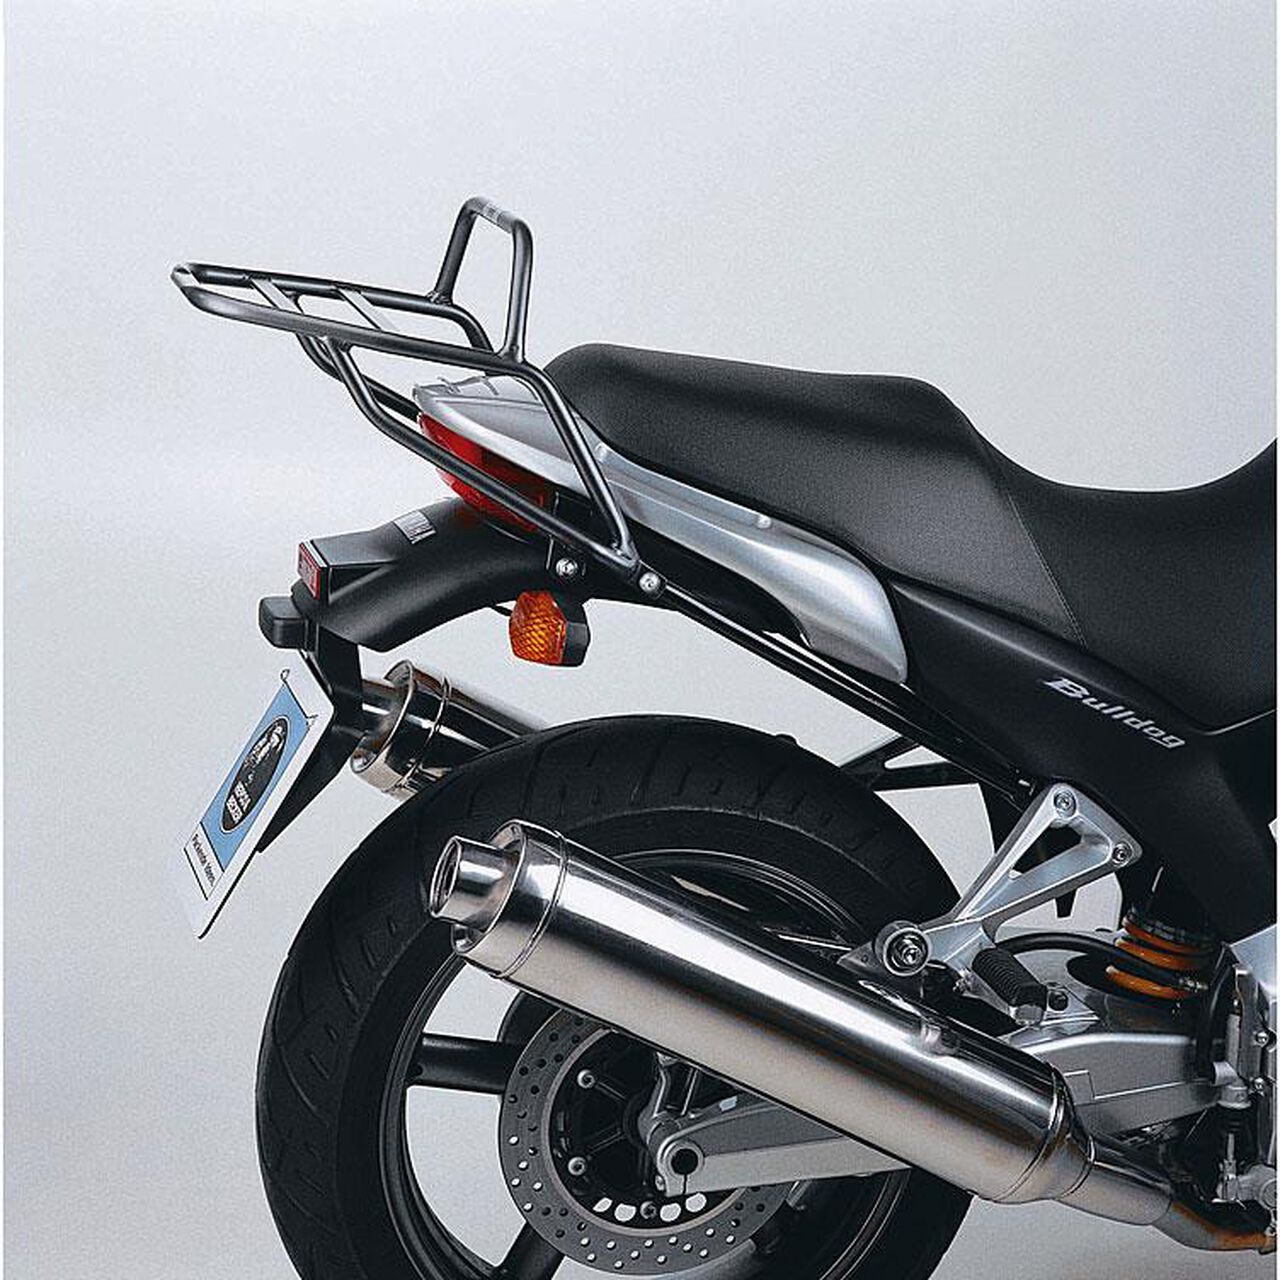 Hepco & Luggage rack black Kawasaki GPX 600 R for EUR 185.00 | POLO Motorrad